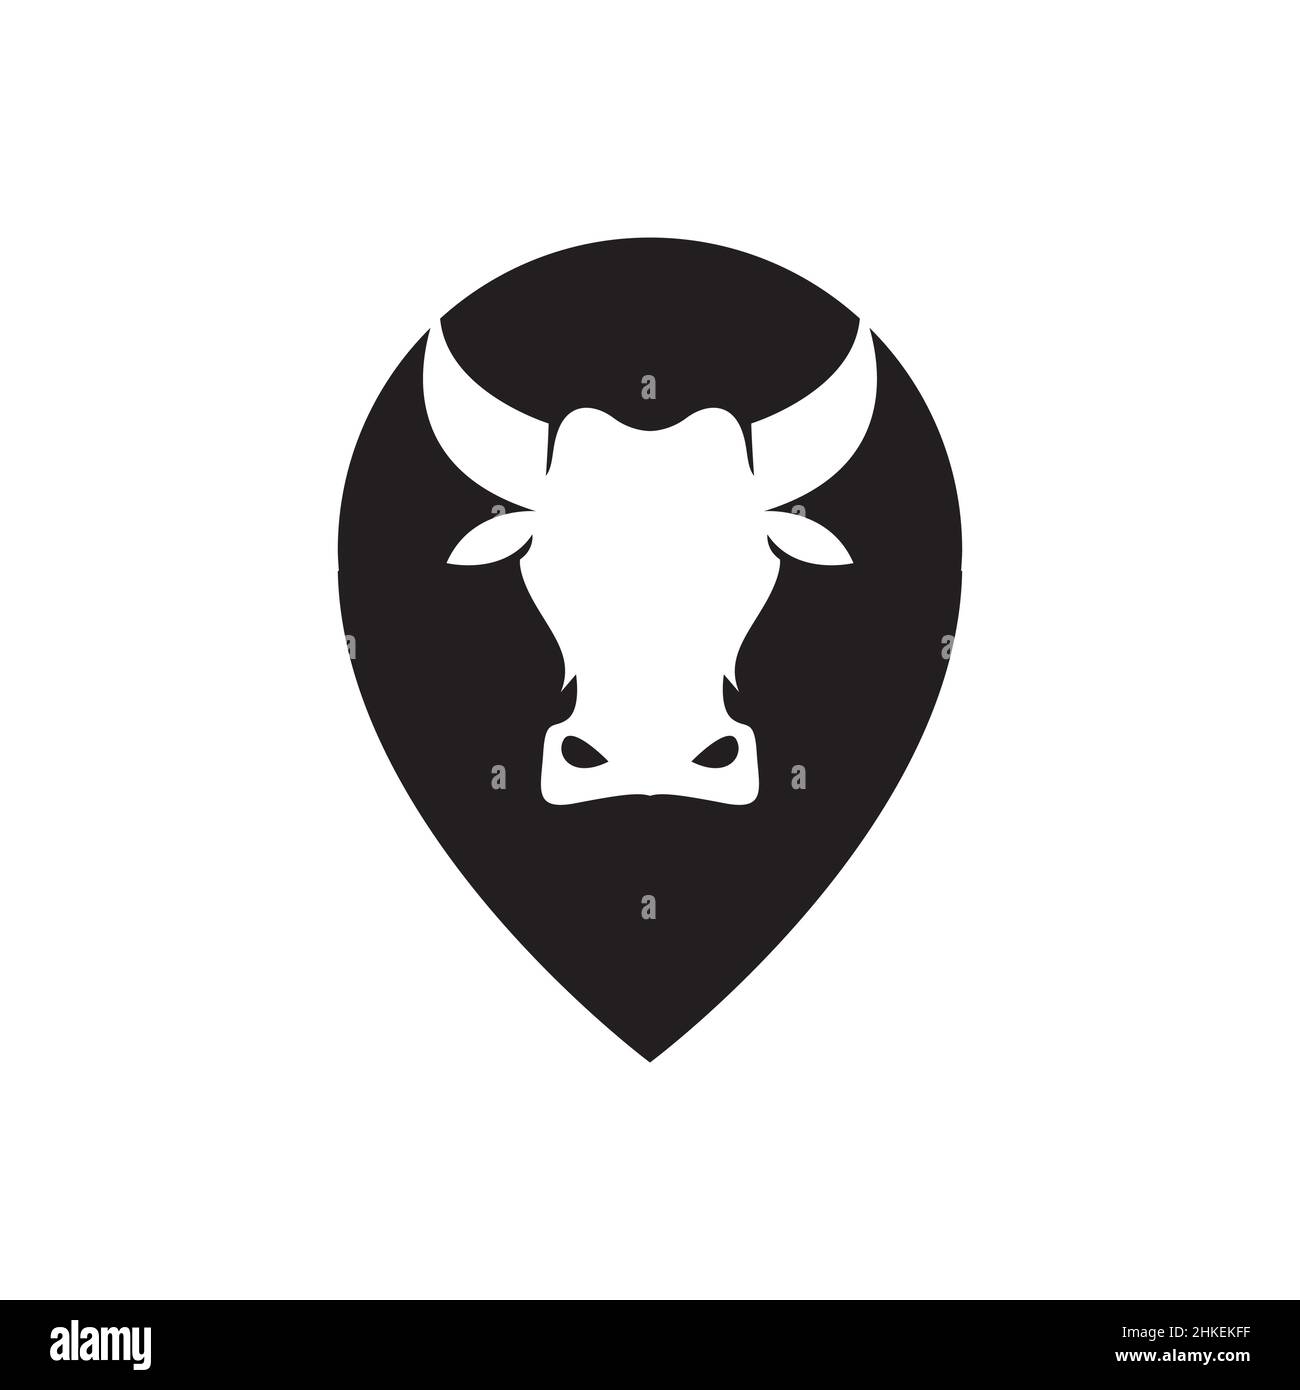 PIN Karte Lage mit Kuh Kopf Logo Design, Vektor Grafik Symbol Symbol Illustration kreative Idee Stock Vektor